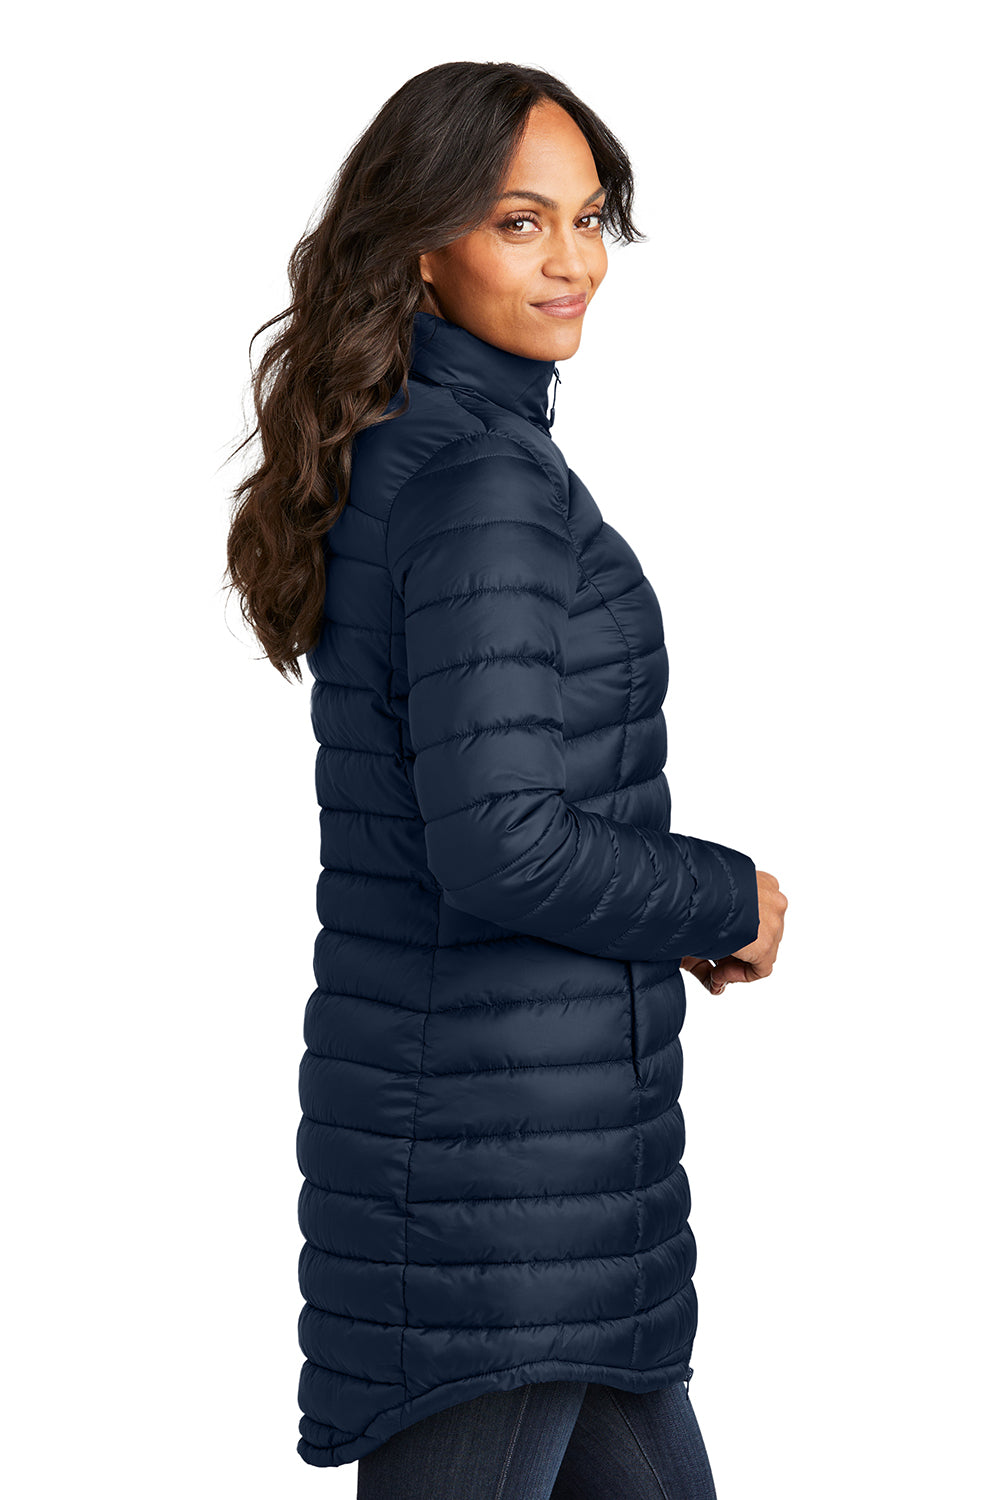 Port Authority L365 Womens Horizon Full Zip Long Puffy Jacket Dress Navy Blue Side